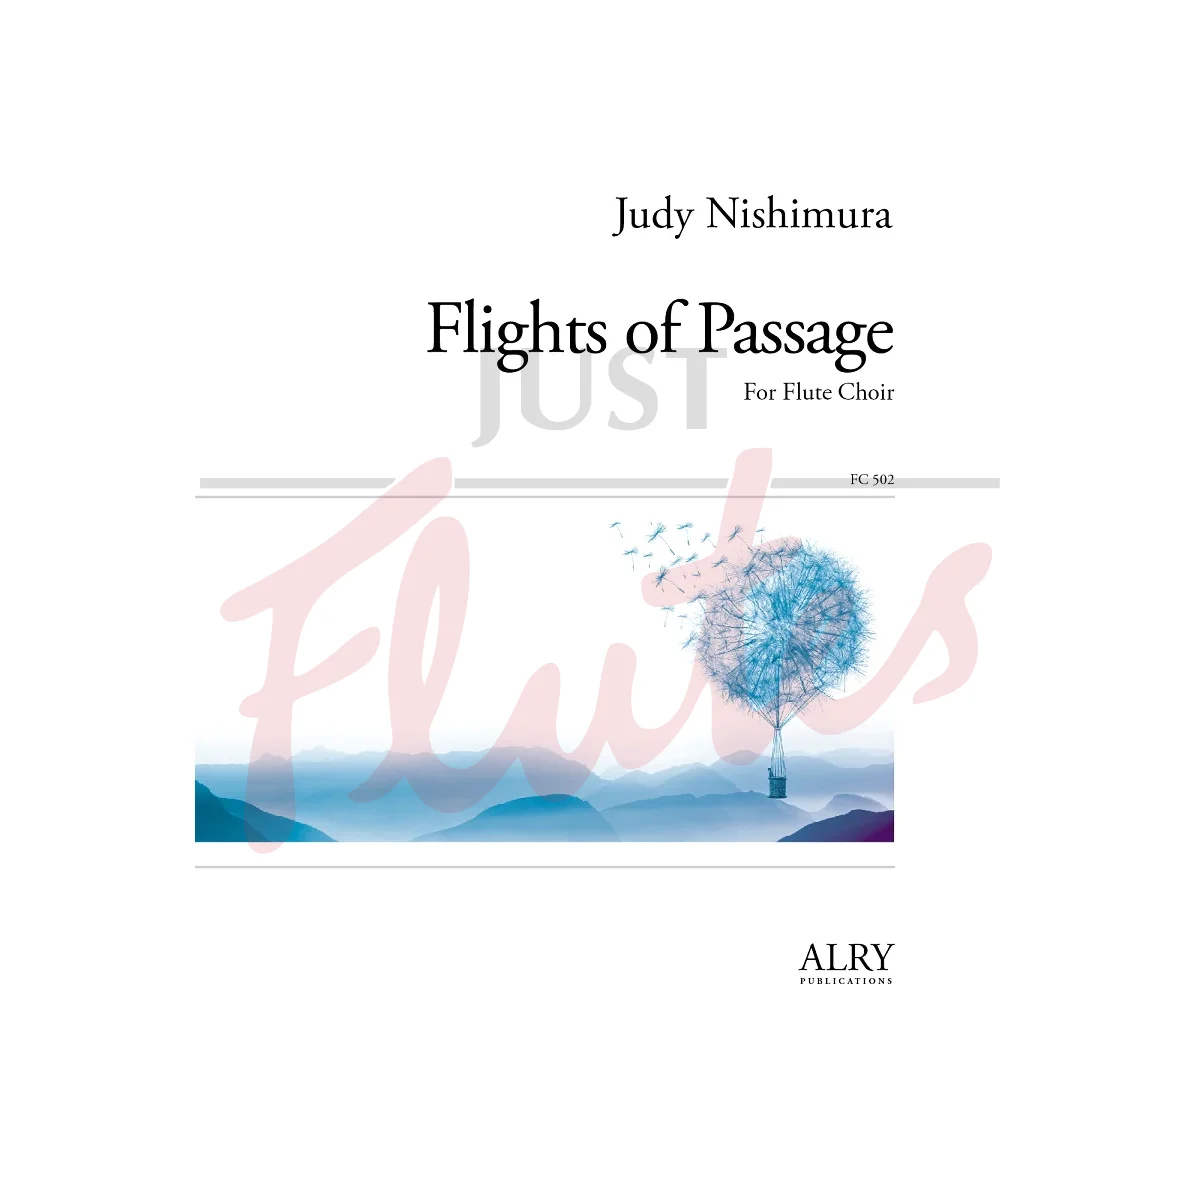 Flights of Passage for Flute Choir